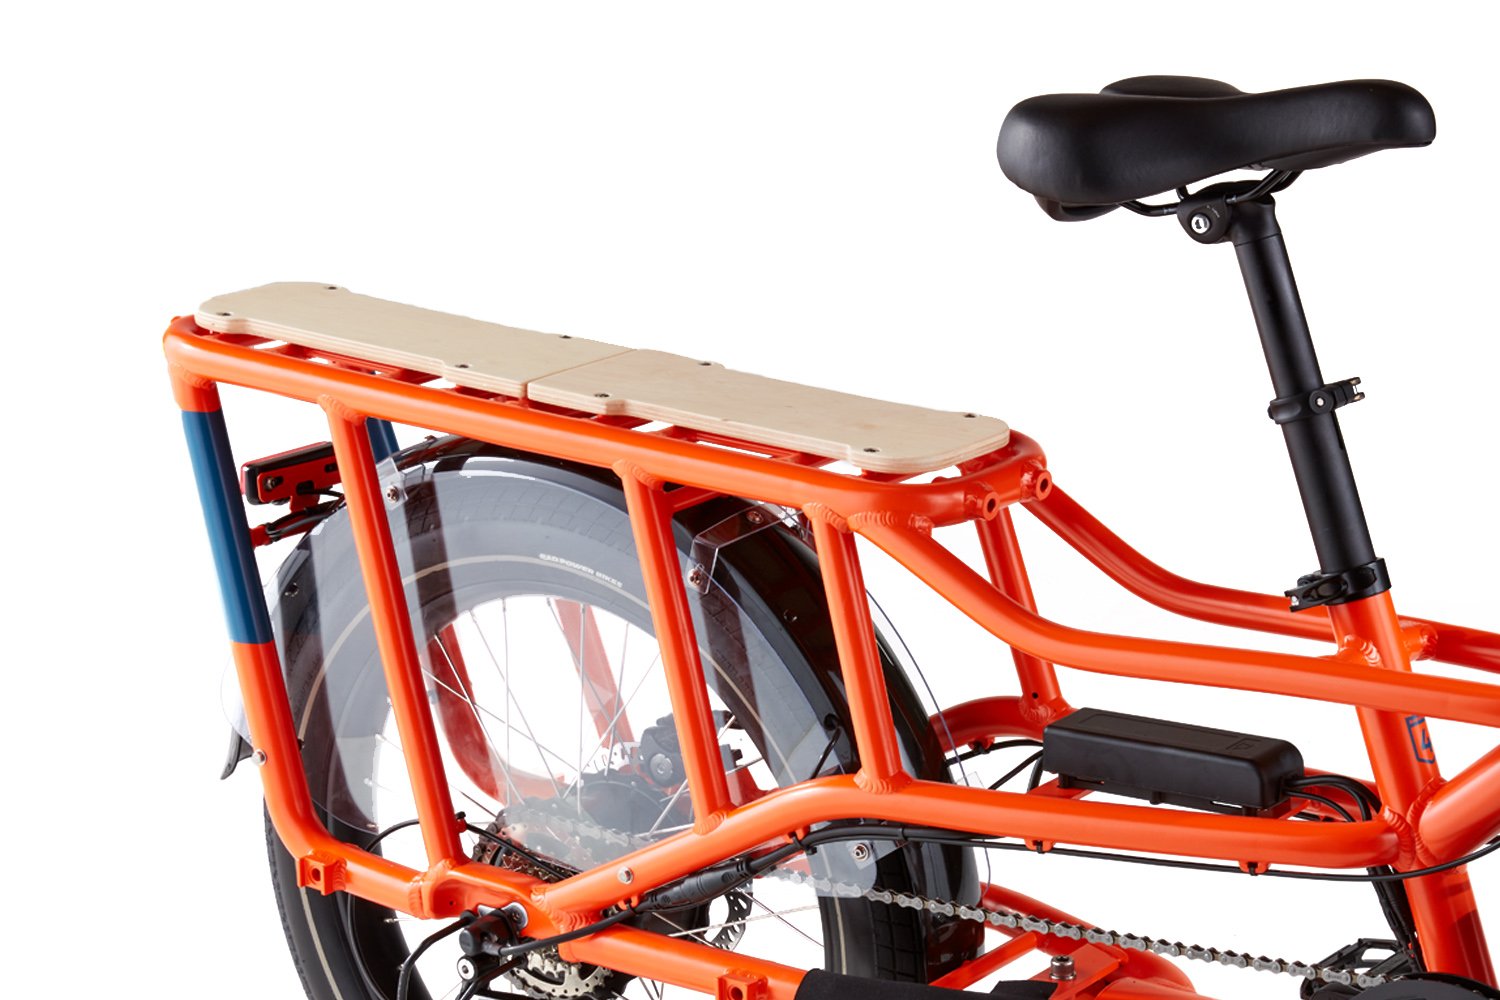 electric bike with wagon